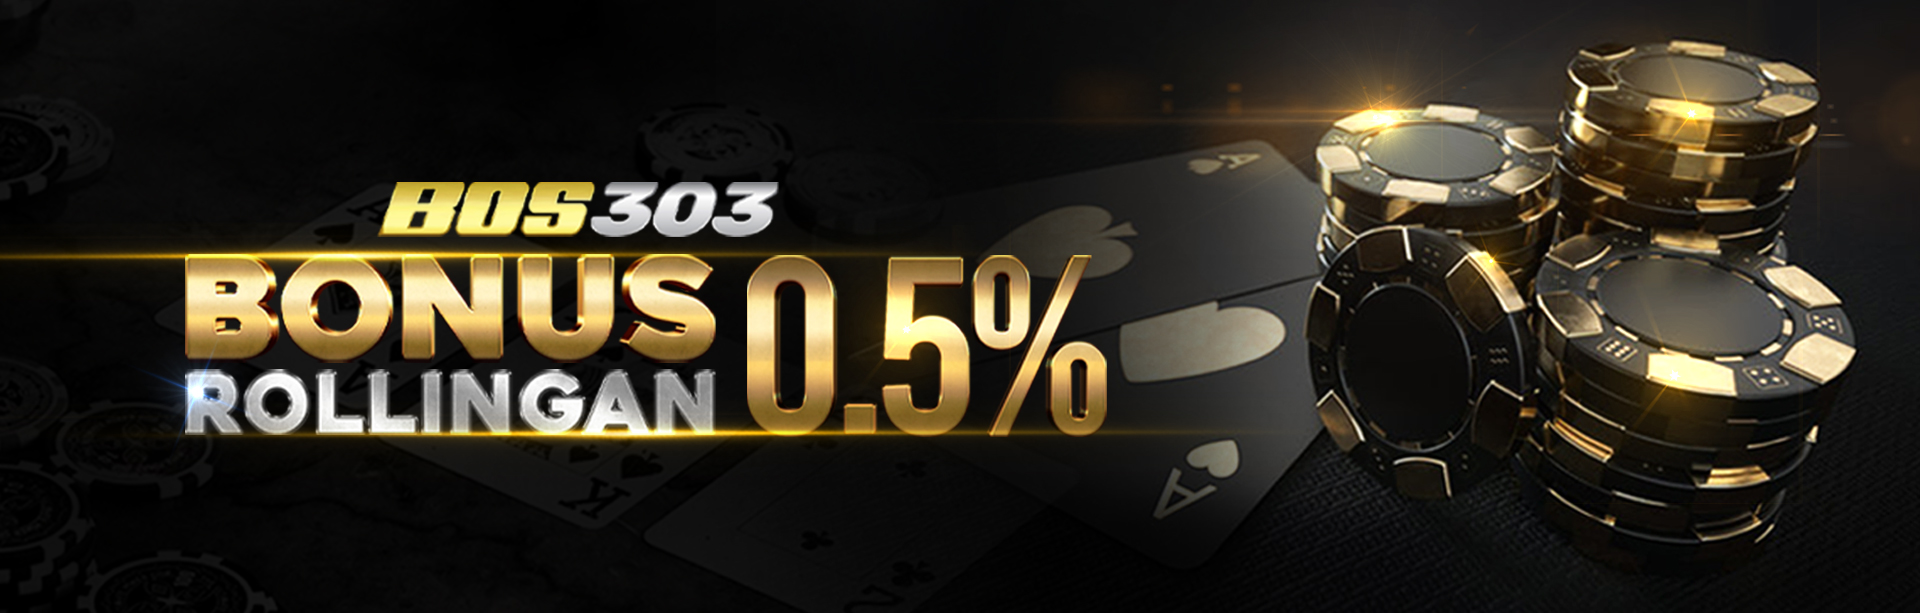 Rolingan Poker 0.5%